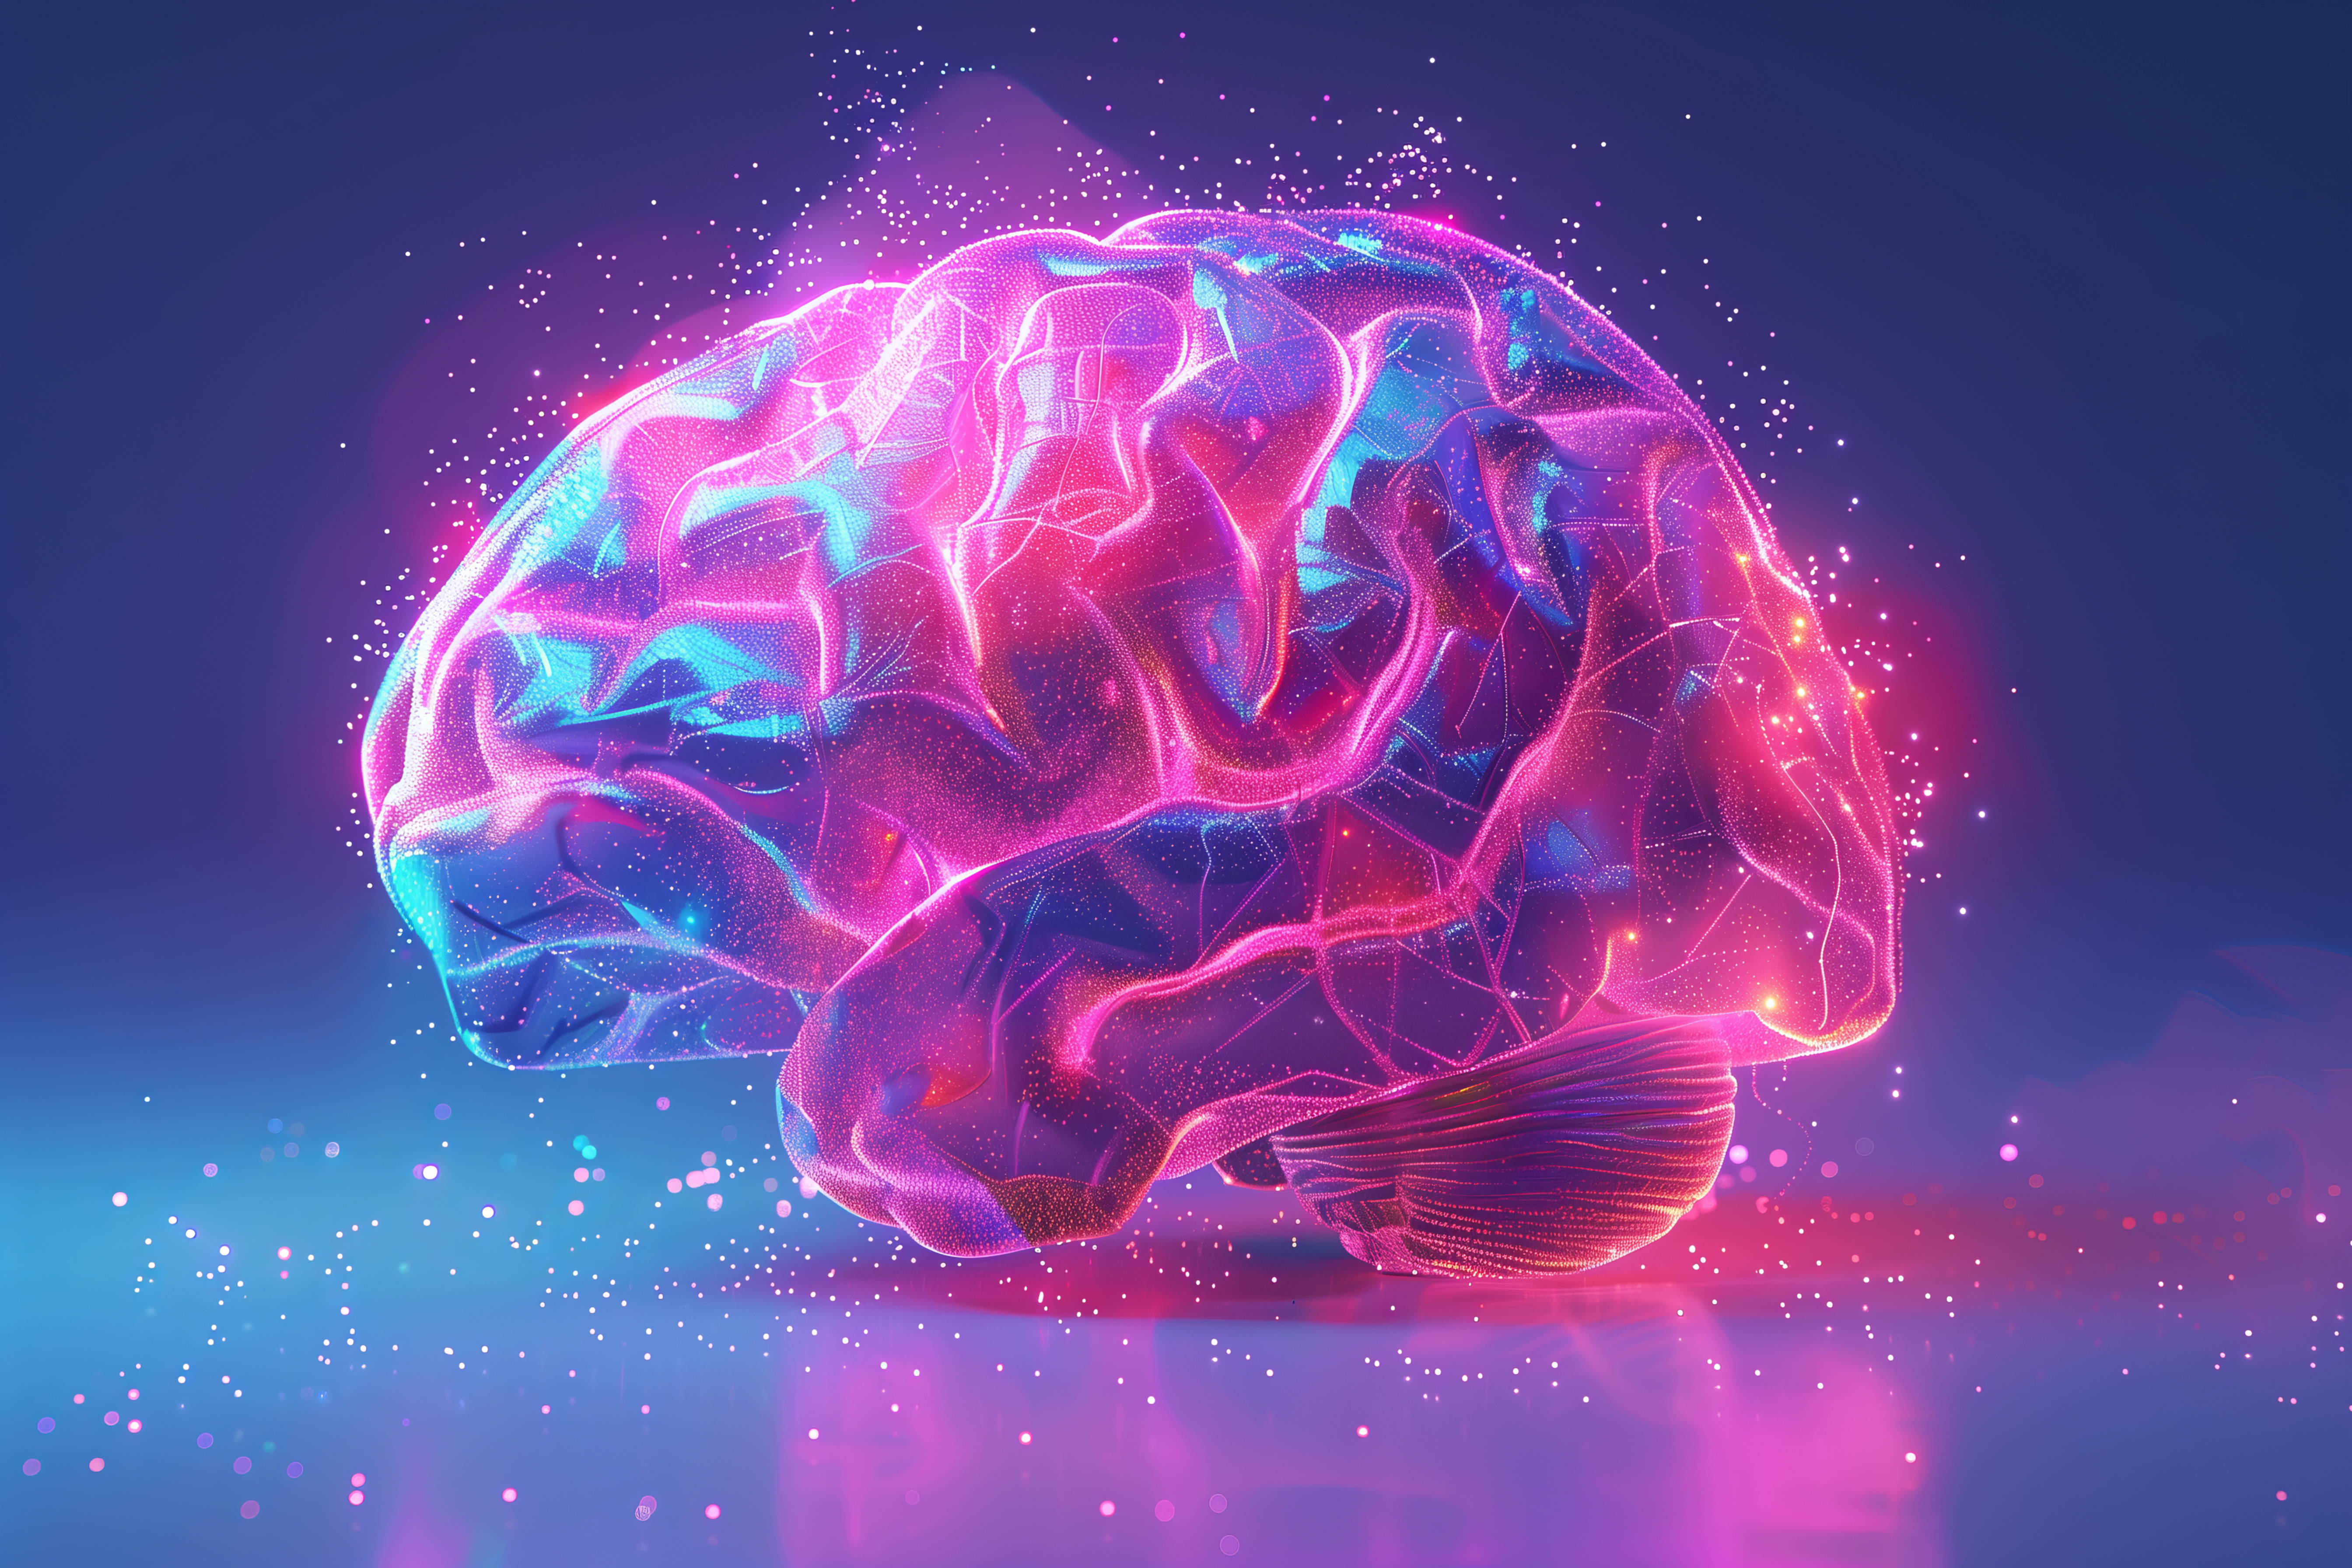 3D illustration of a human brain